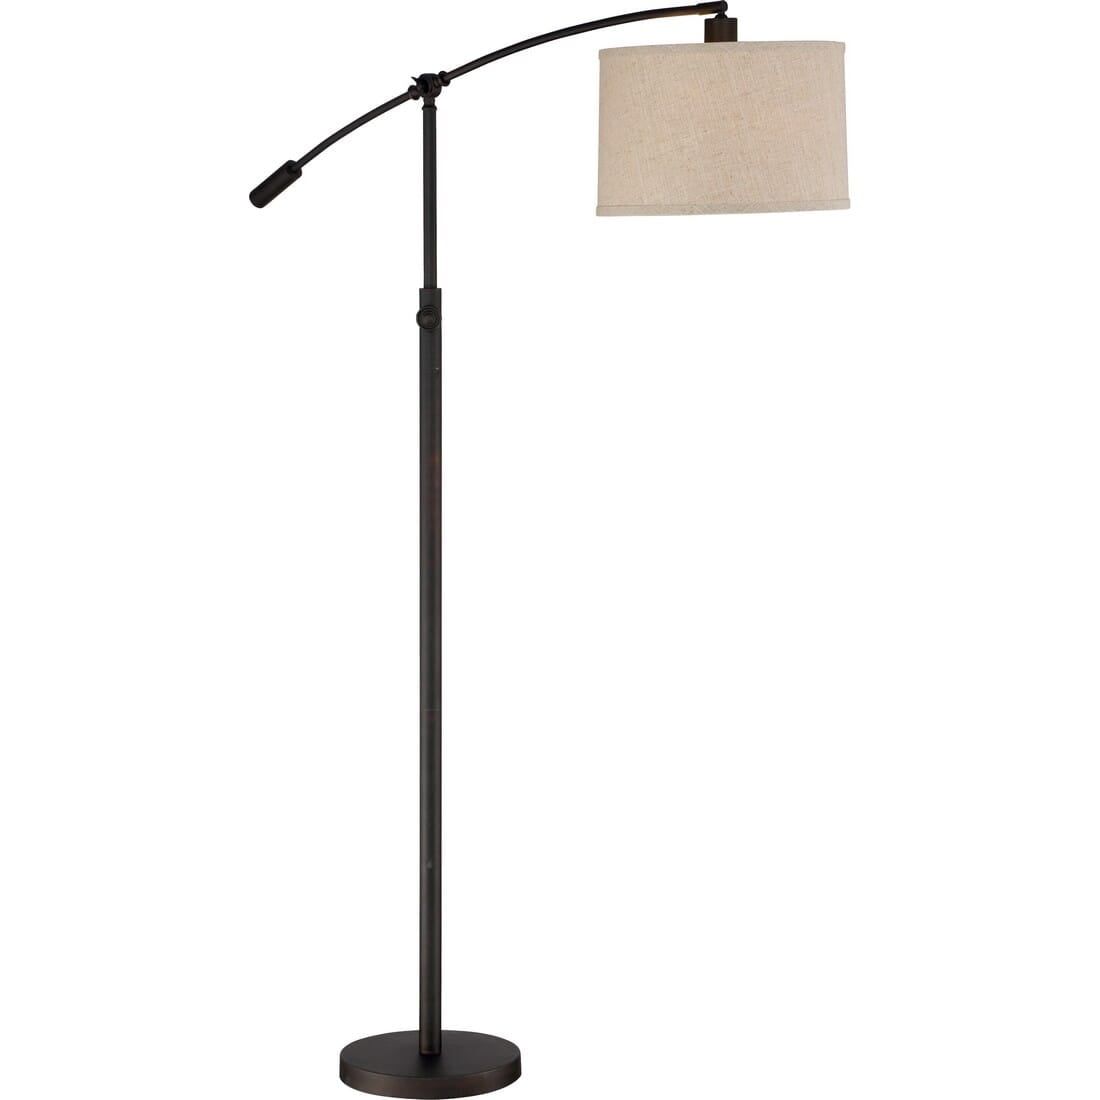 Adjustable Bronze 65" Steel Floor Lamp with White Fabric Shade